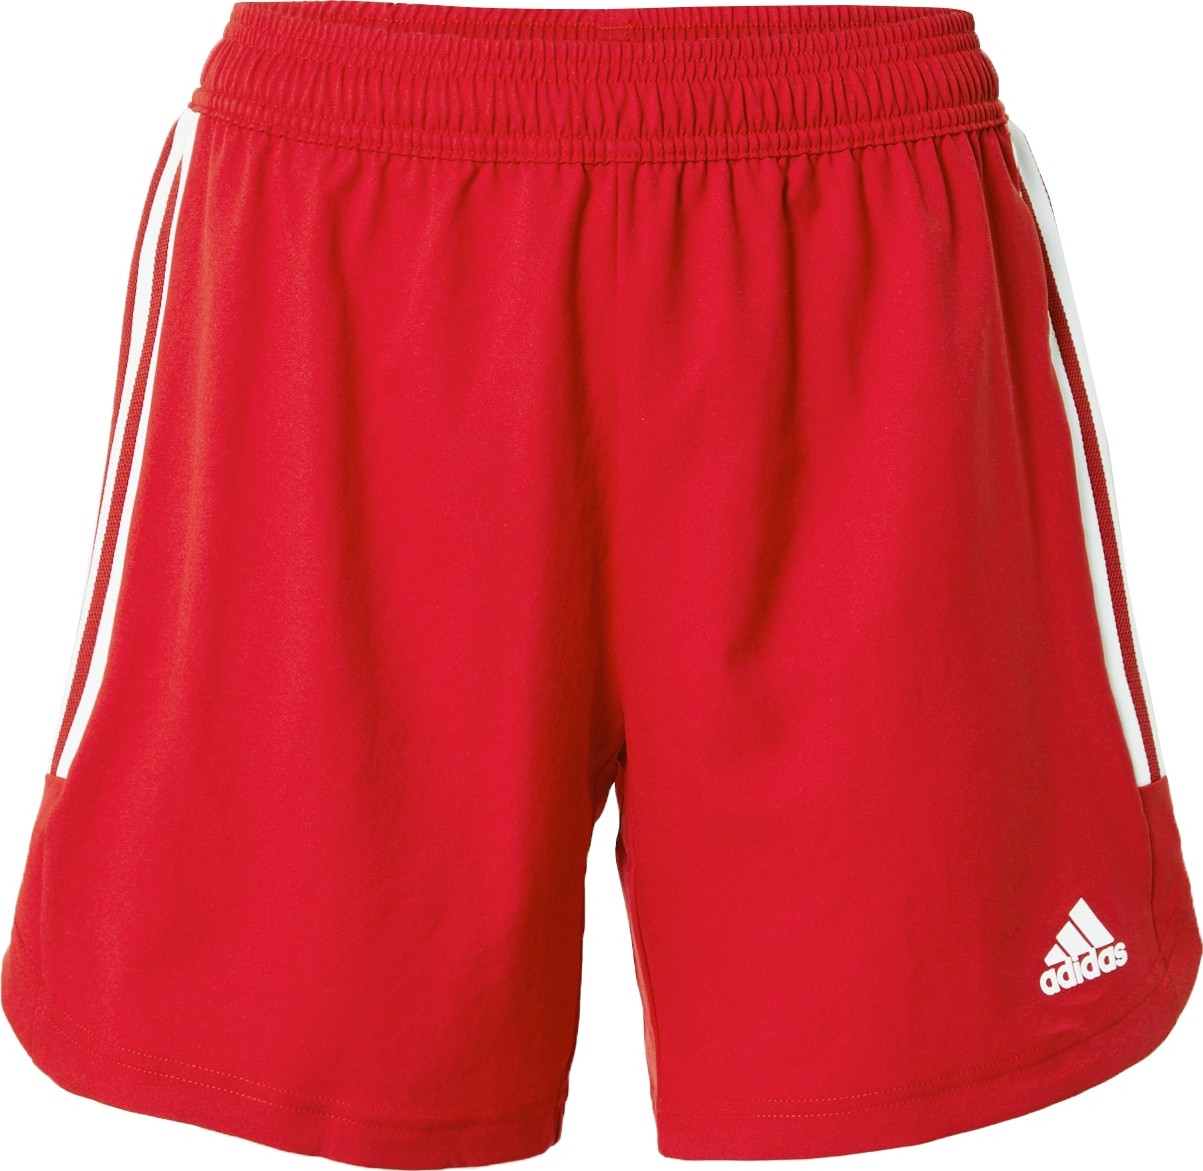 ADIDAS PERFORMANCE Sportovní kalhoty 'Condivo' červená / bílá